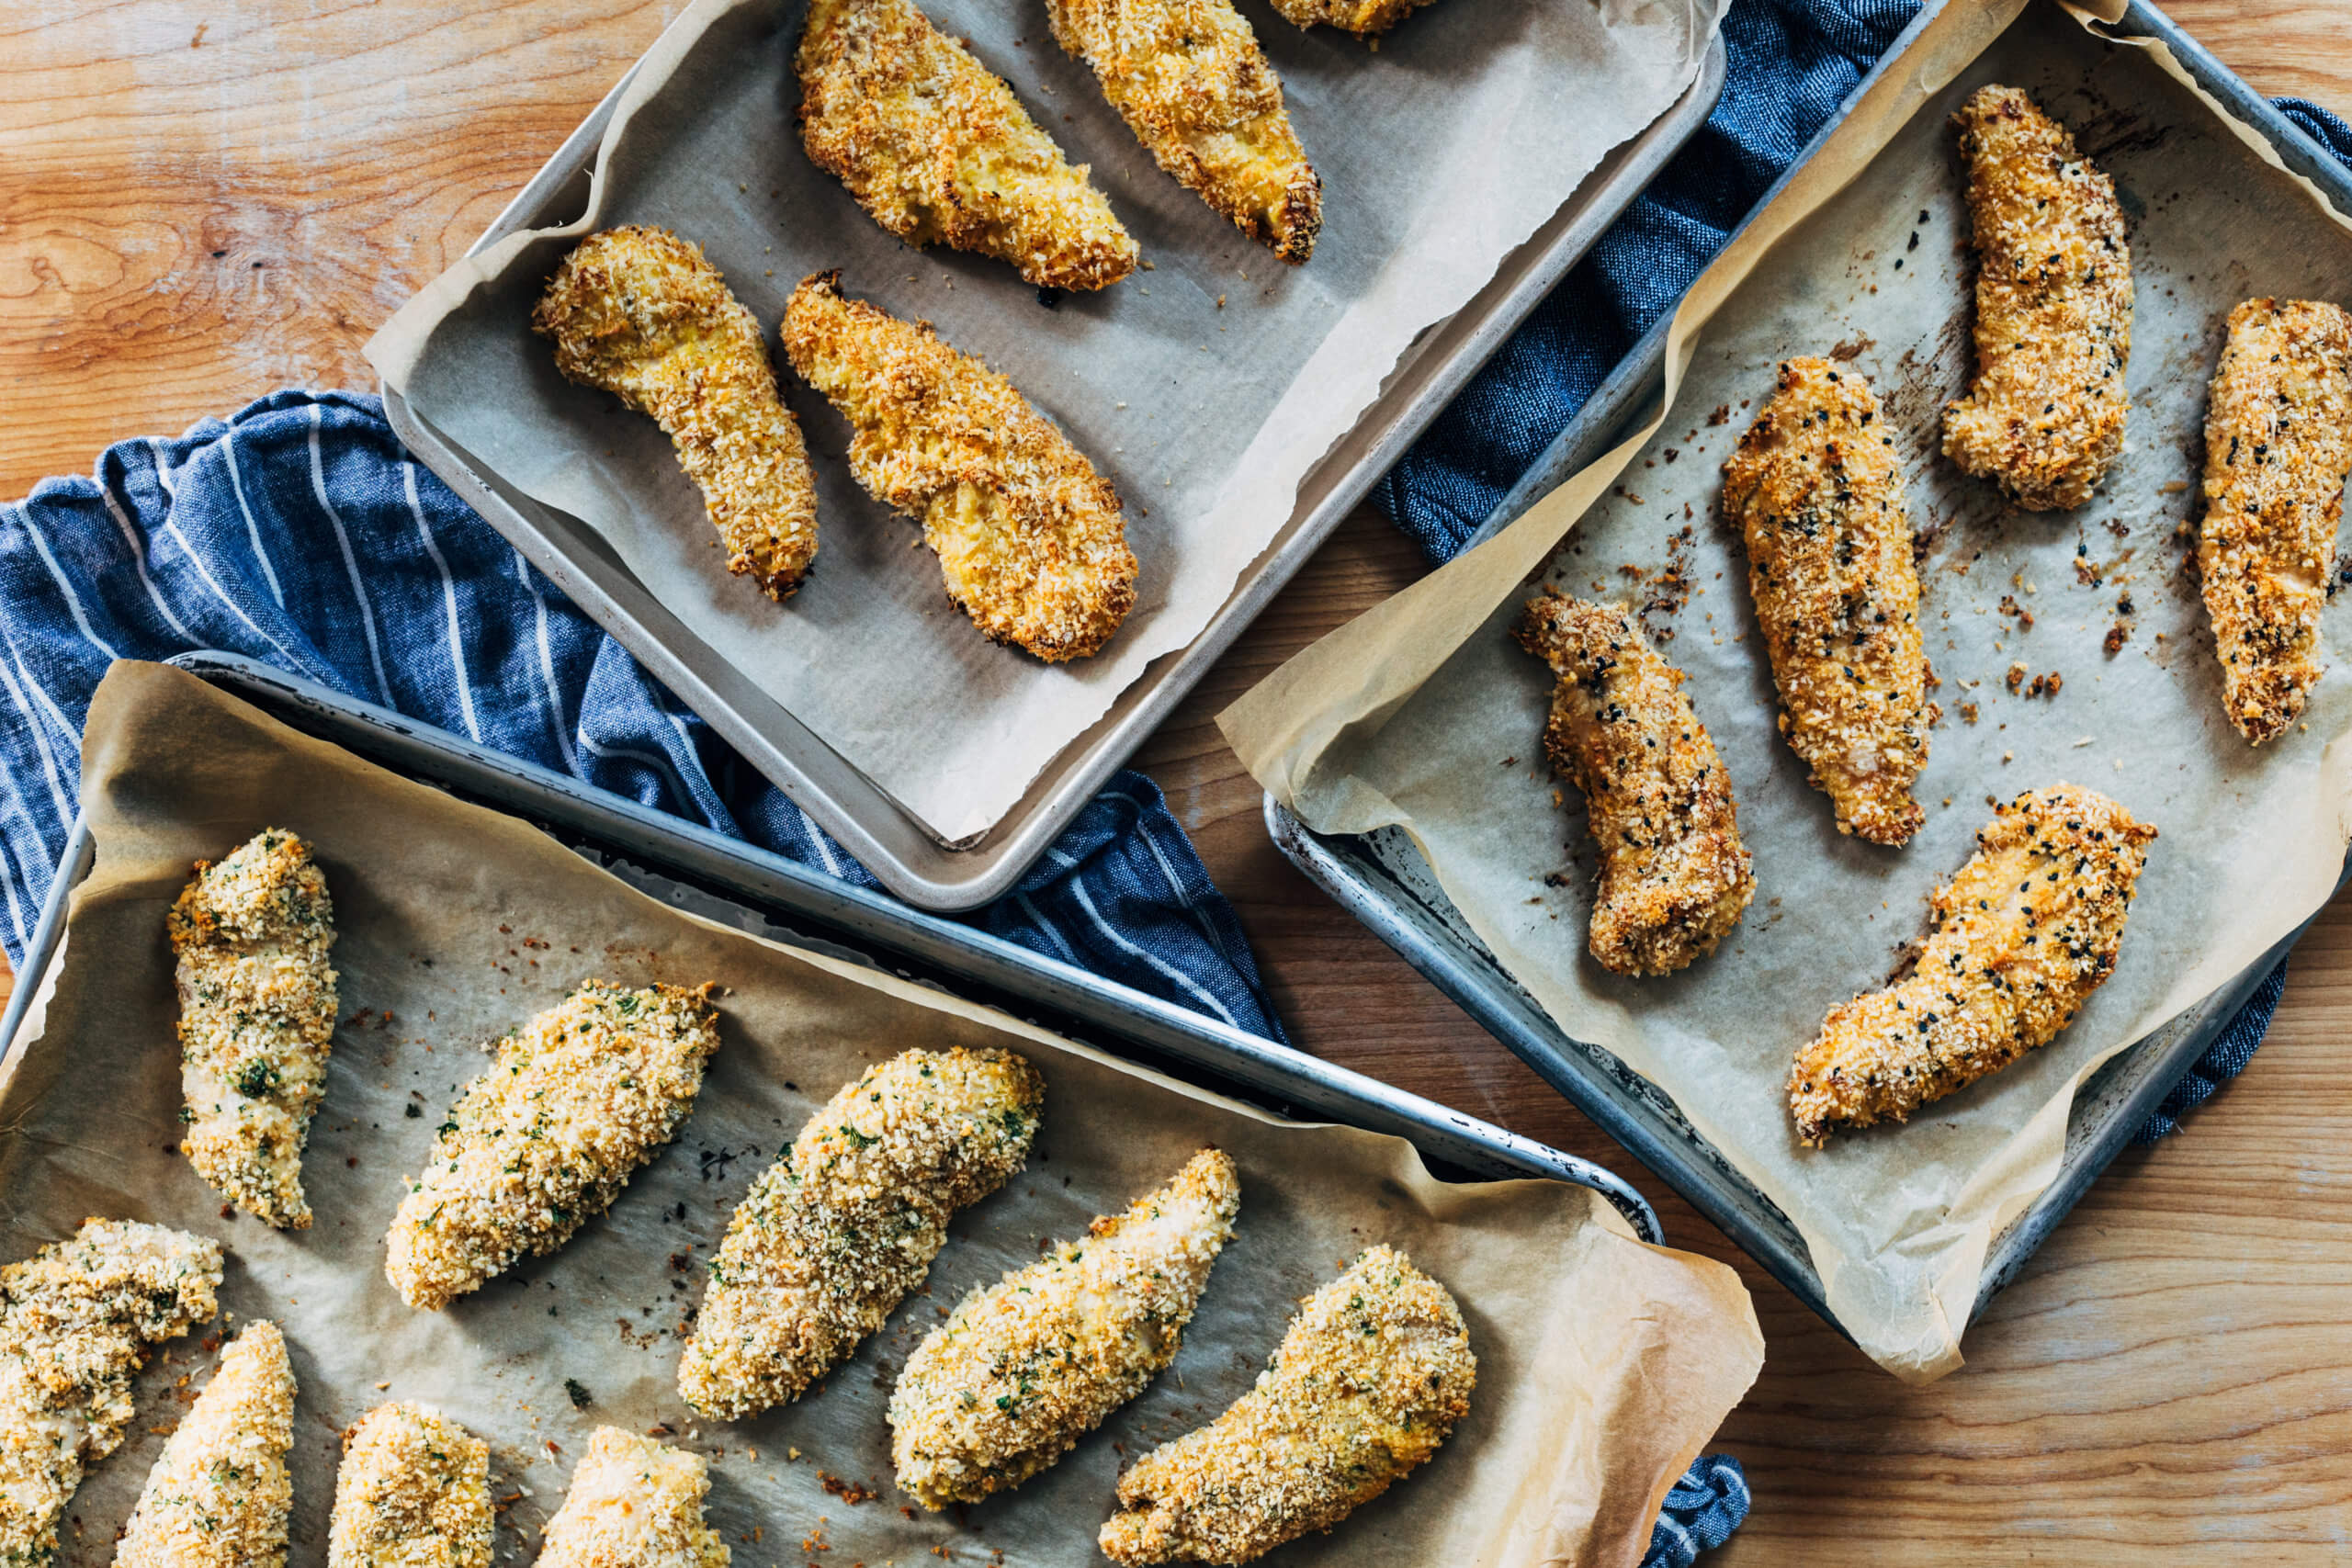 Baked chicken tenders 3 ways: garlic and herb, sesame-ginger, and honey mustard. 